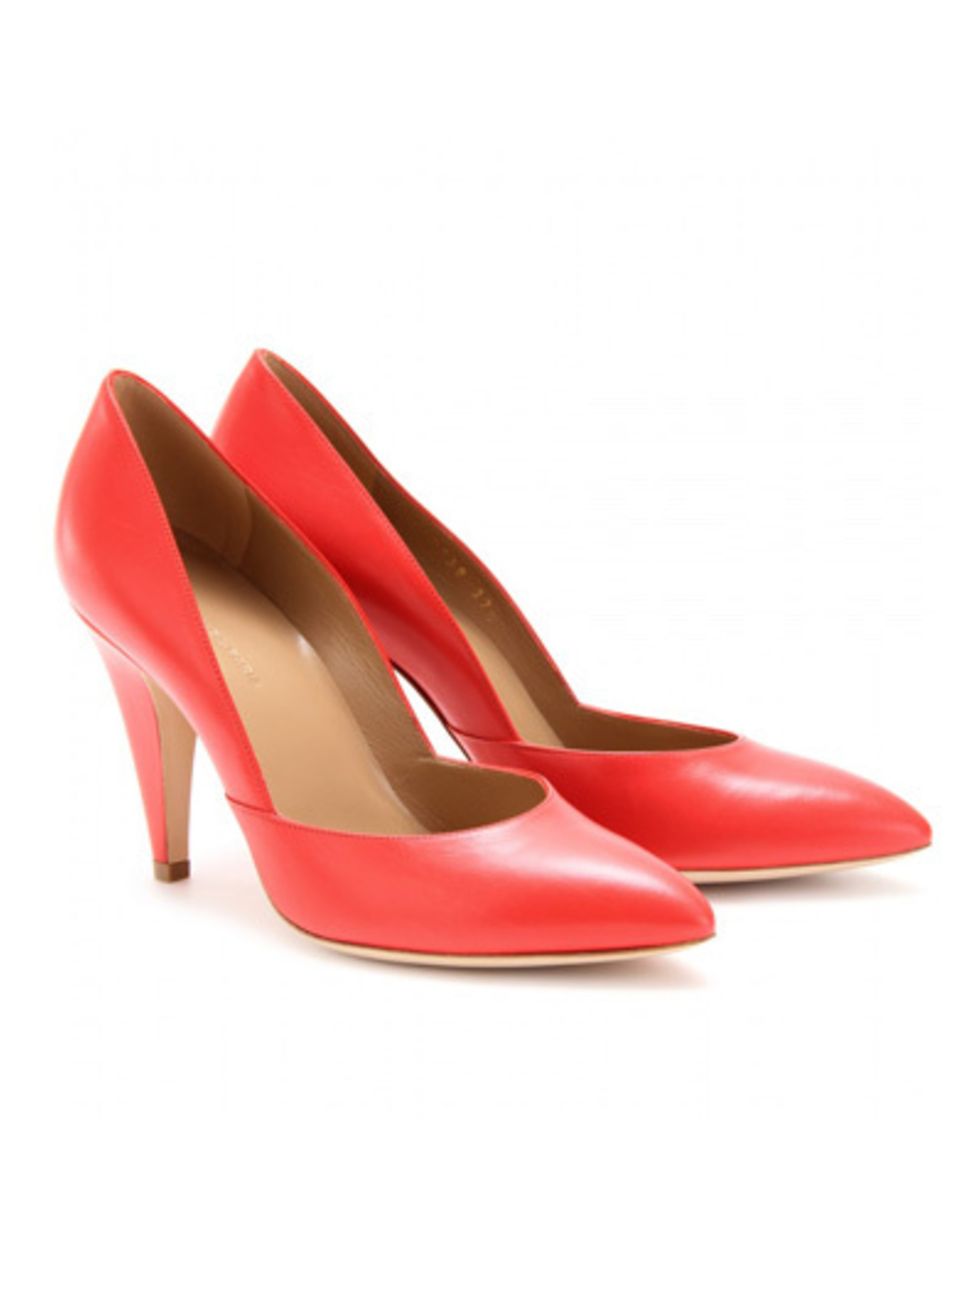 Brown, High heels, Red, Basic pump, Tan, Carmine, Sandal, Maroon, Court shoe, Beige, 